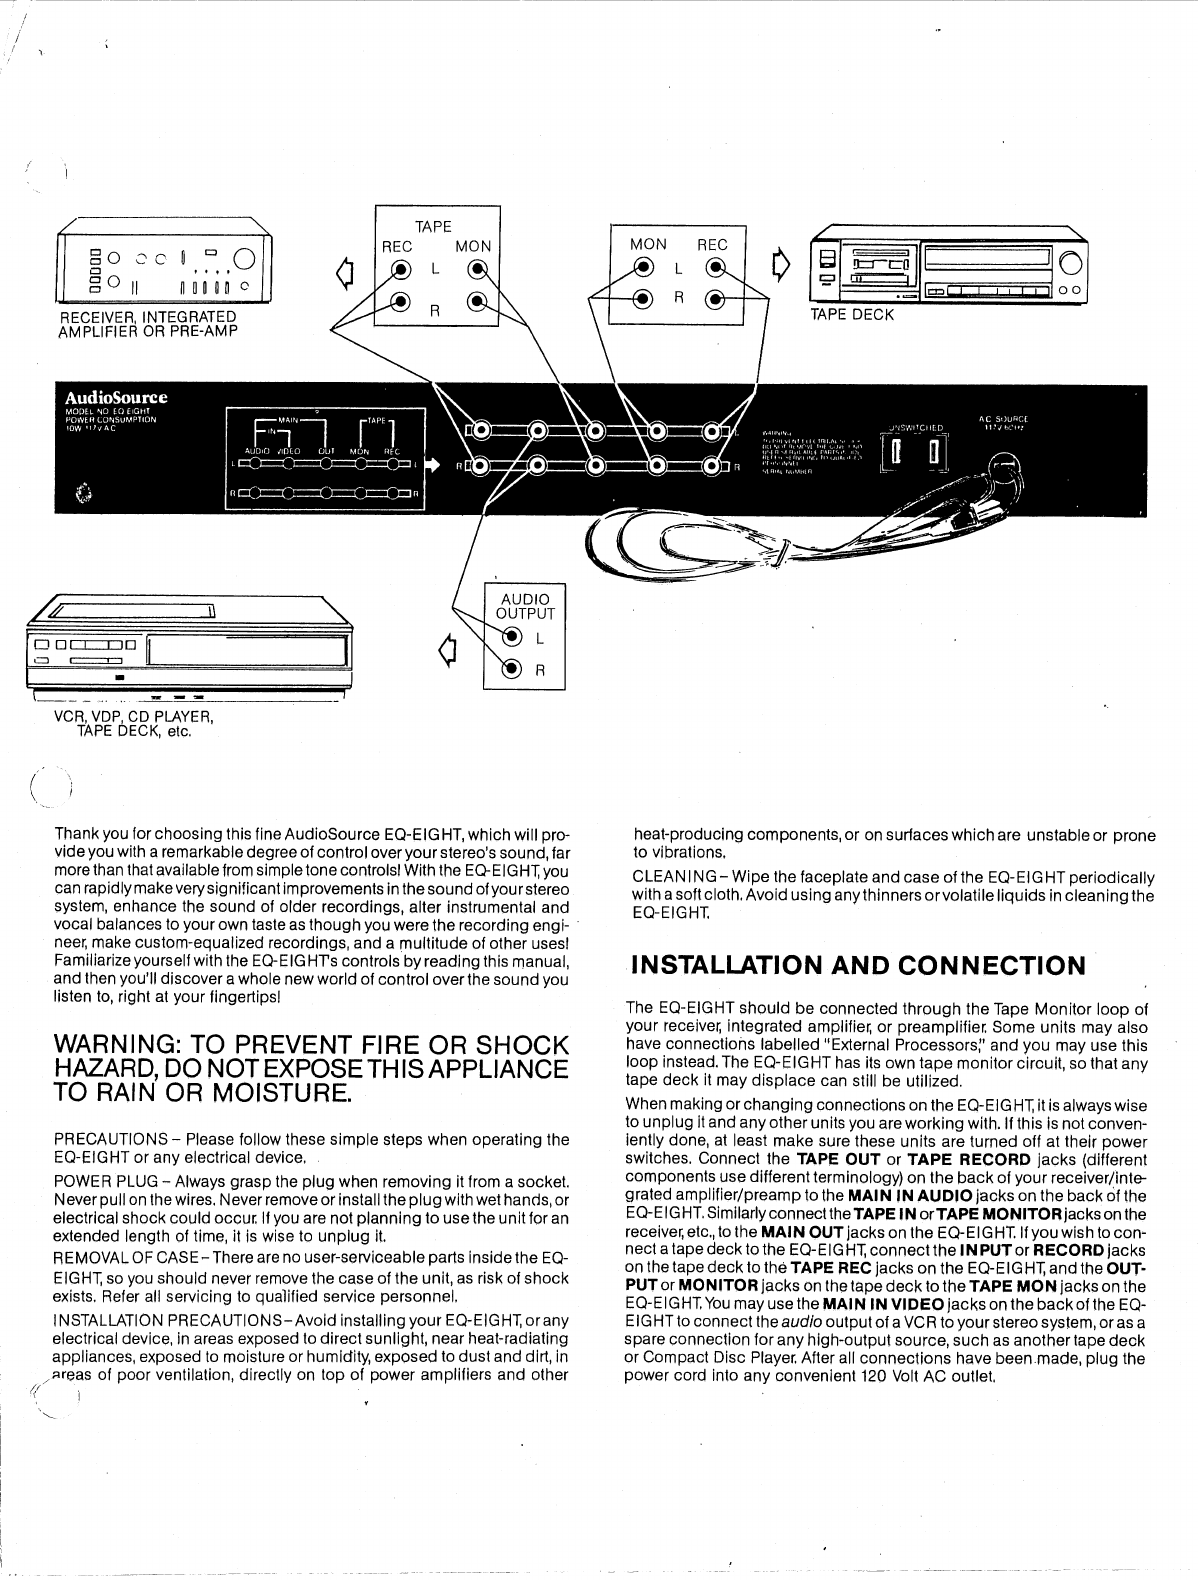 genexxa 10 band graphic equalizer manuals online